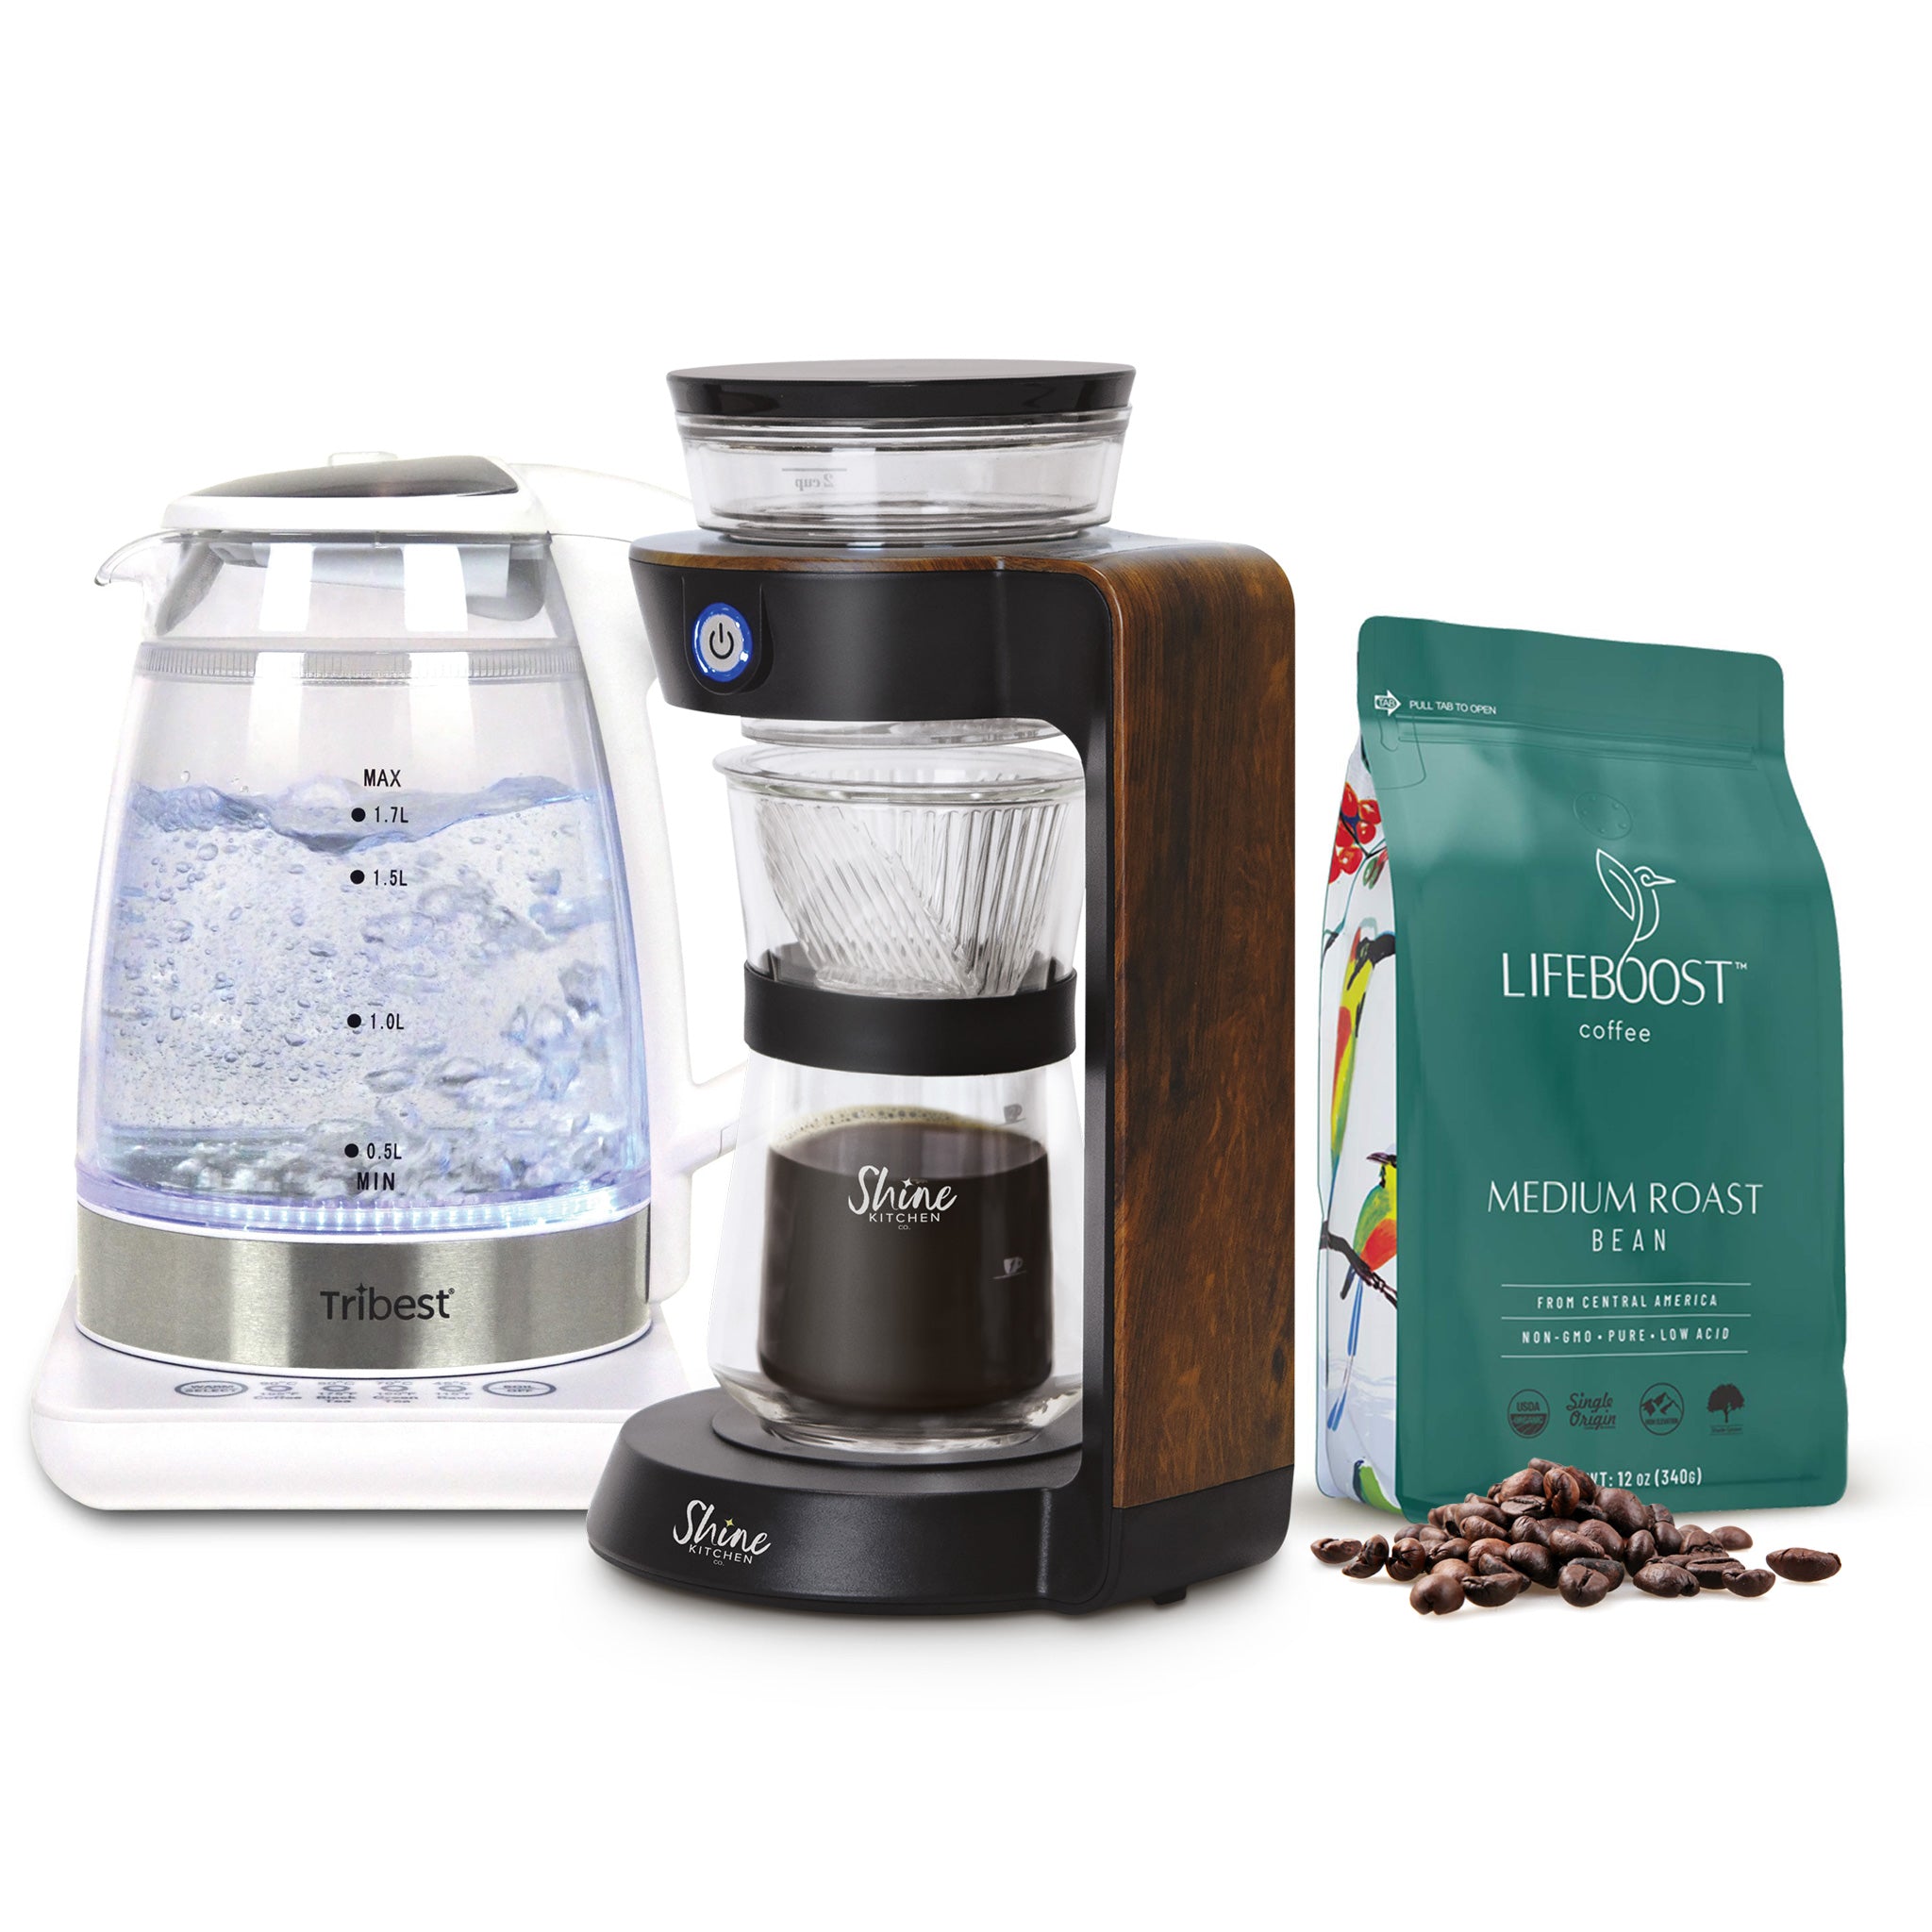 Lifeboost Coffee - A Healthy Coffee Company